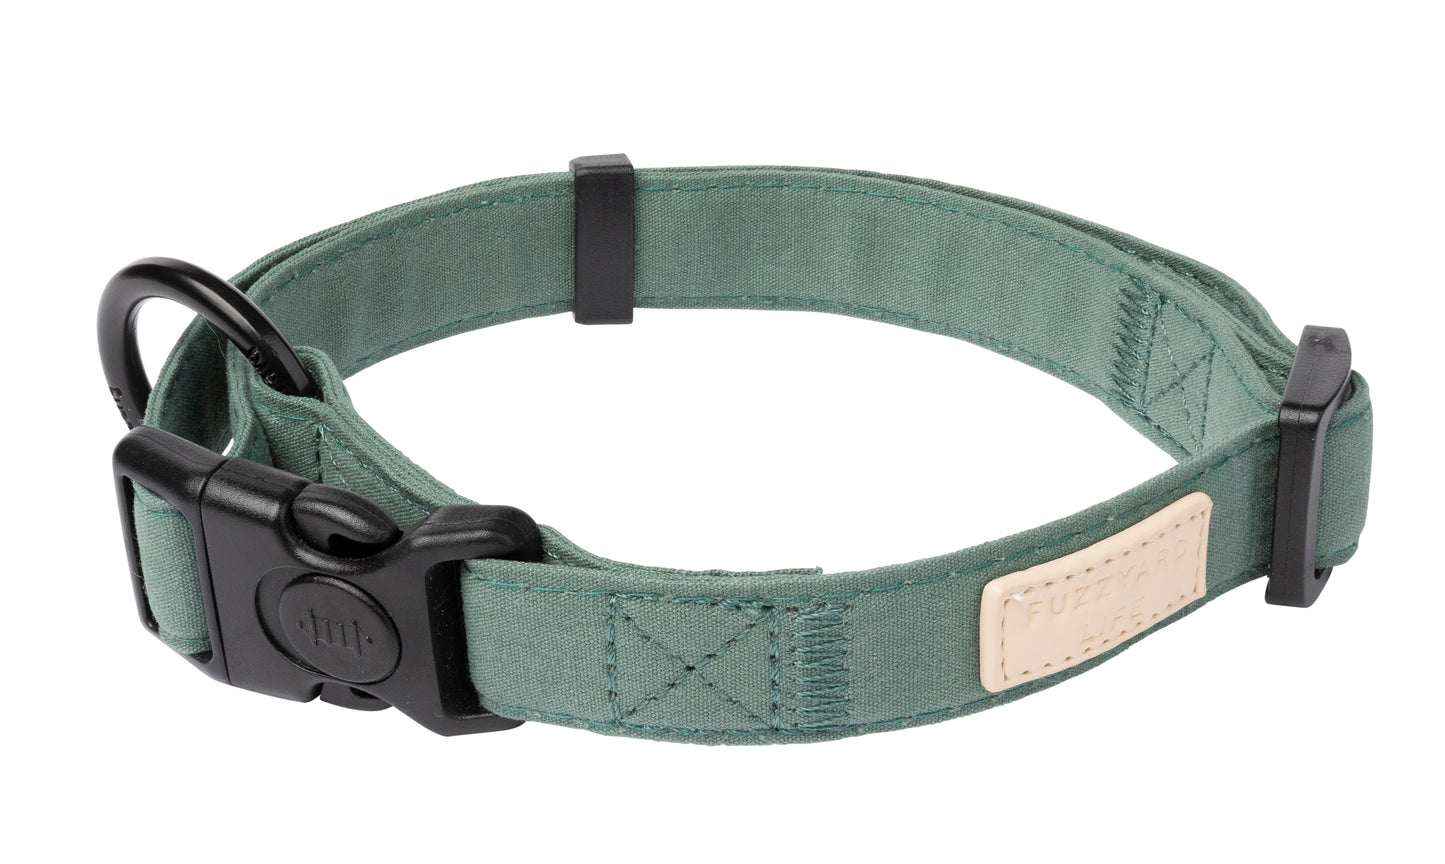 FuzzYard Life Dog Collar - Myrtle Green (3 Sizes)